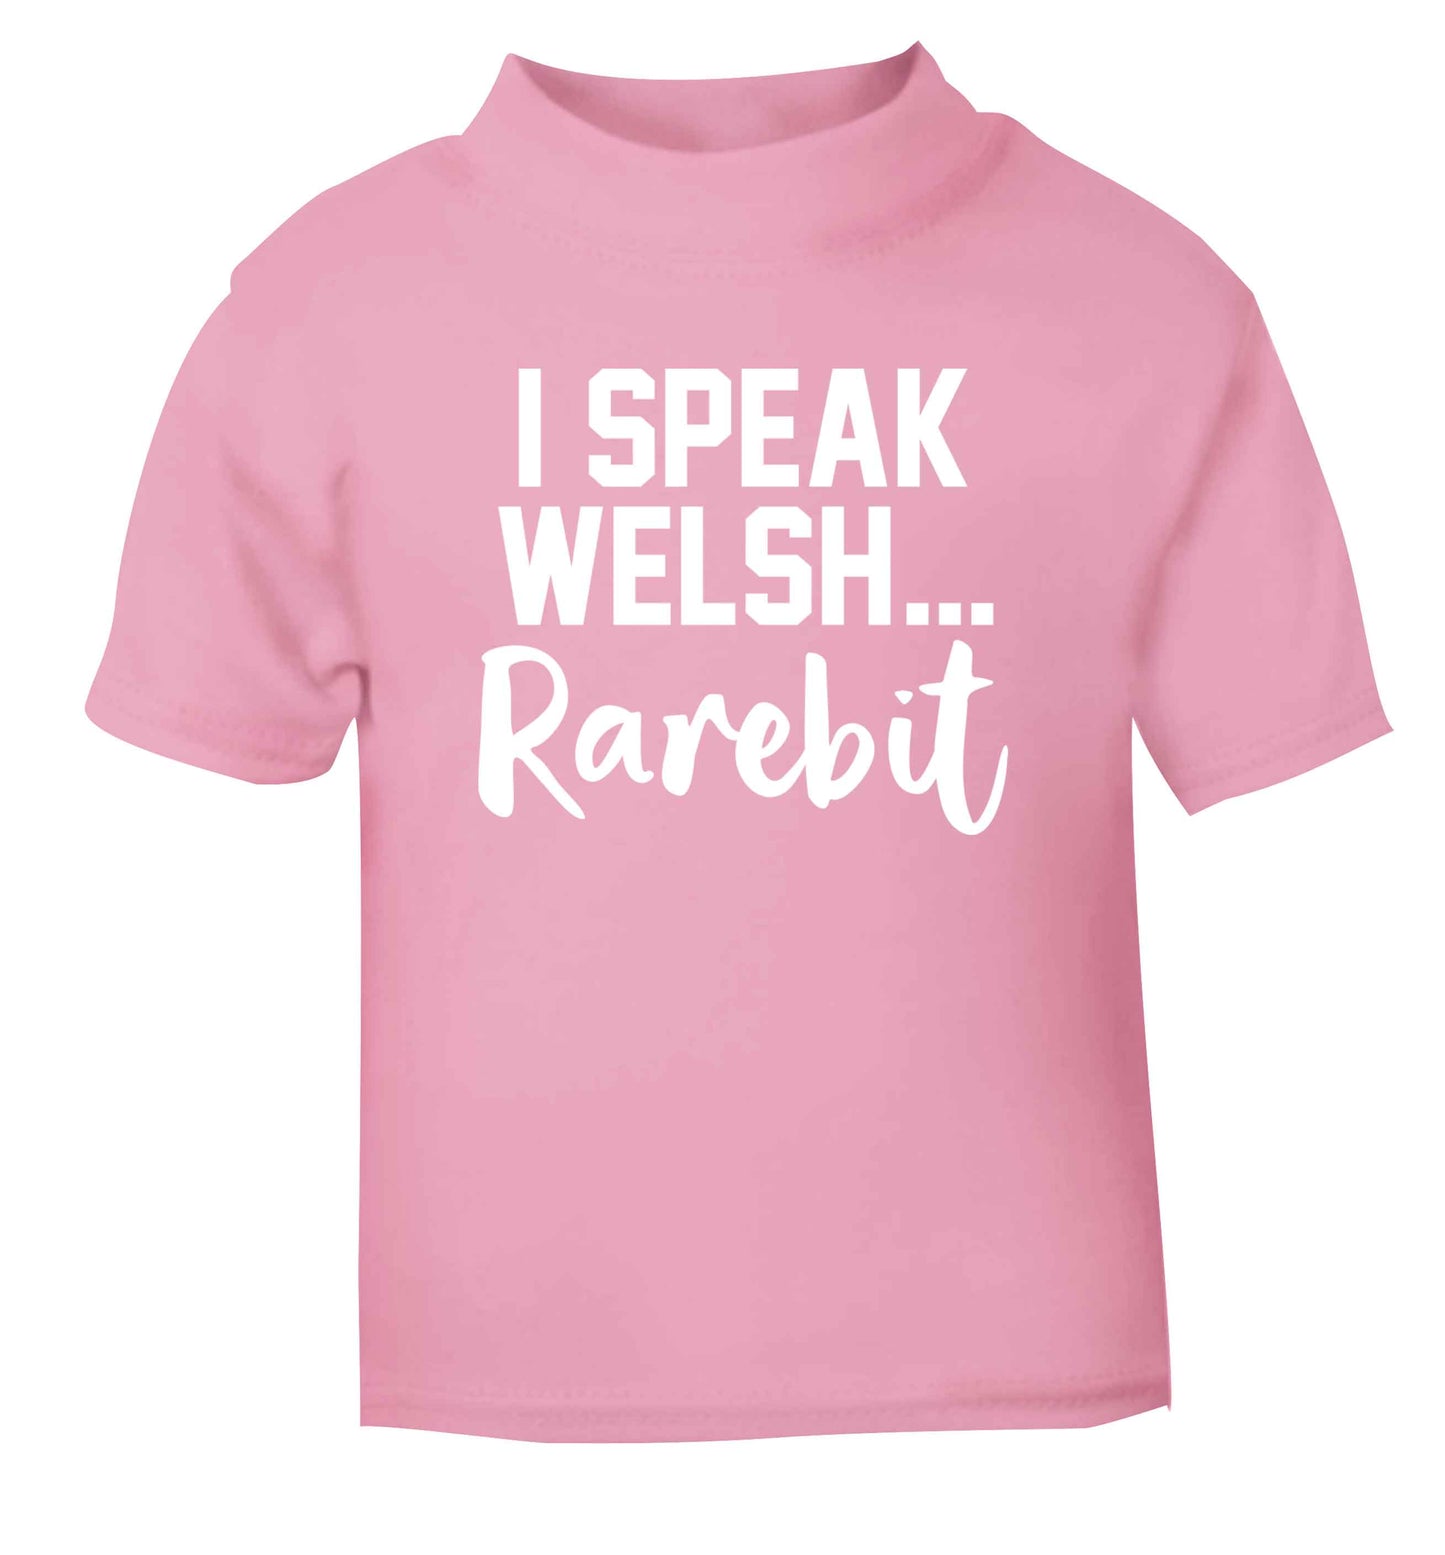 I speak Welsh...rarebit light pink Baby Toddler Tshirt 2 Years